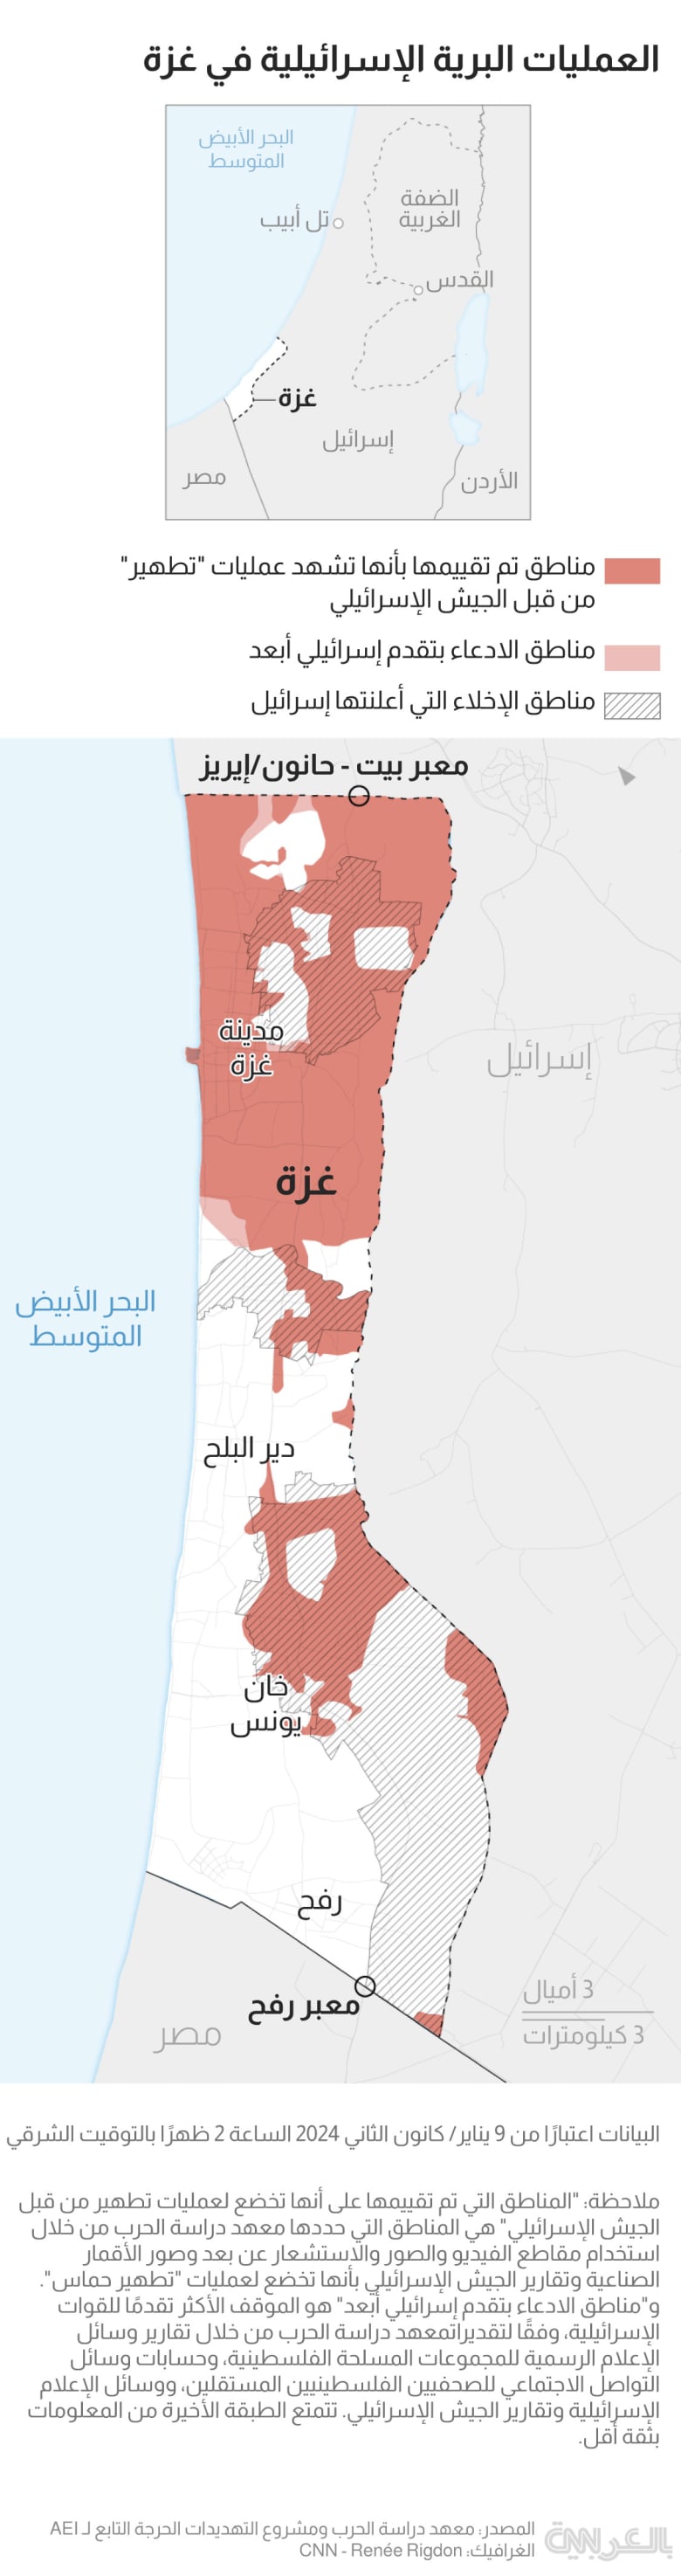 israels-ground-operations-gaza-jan9